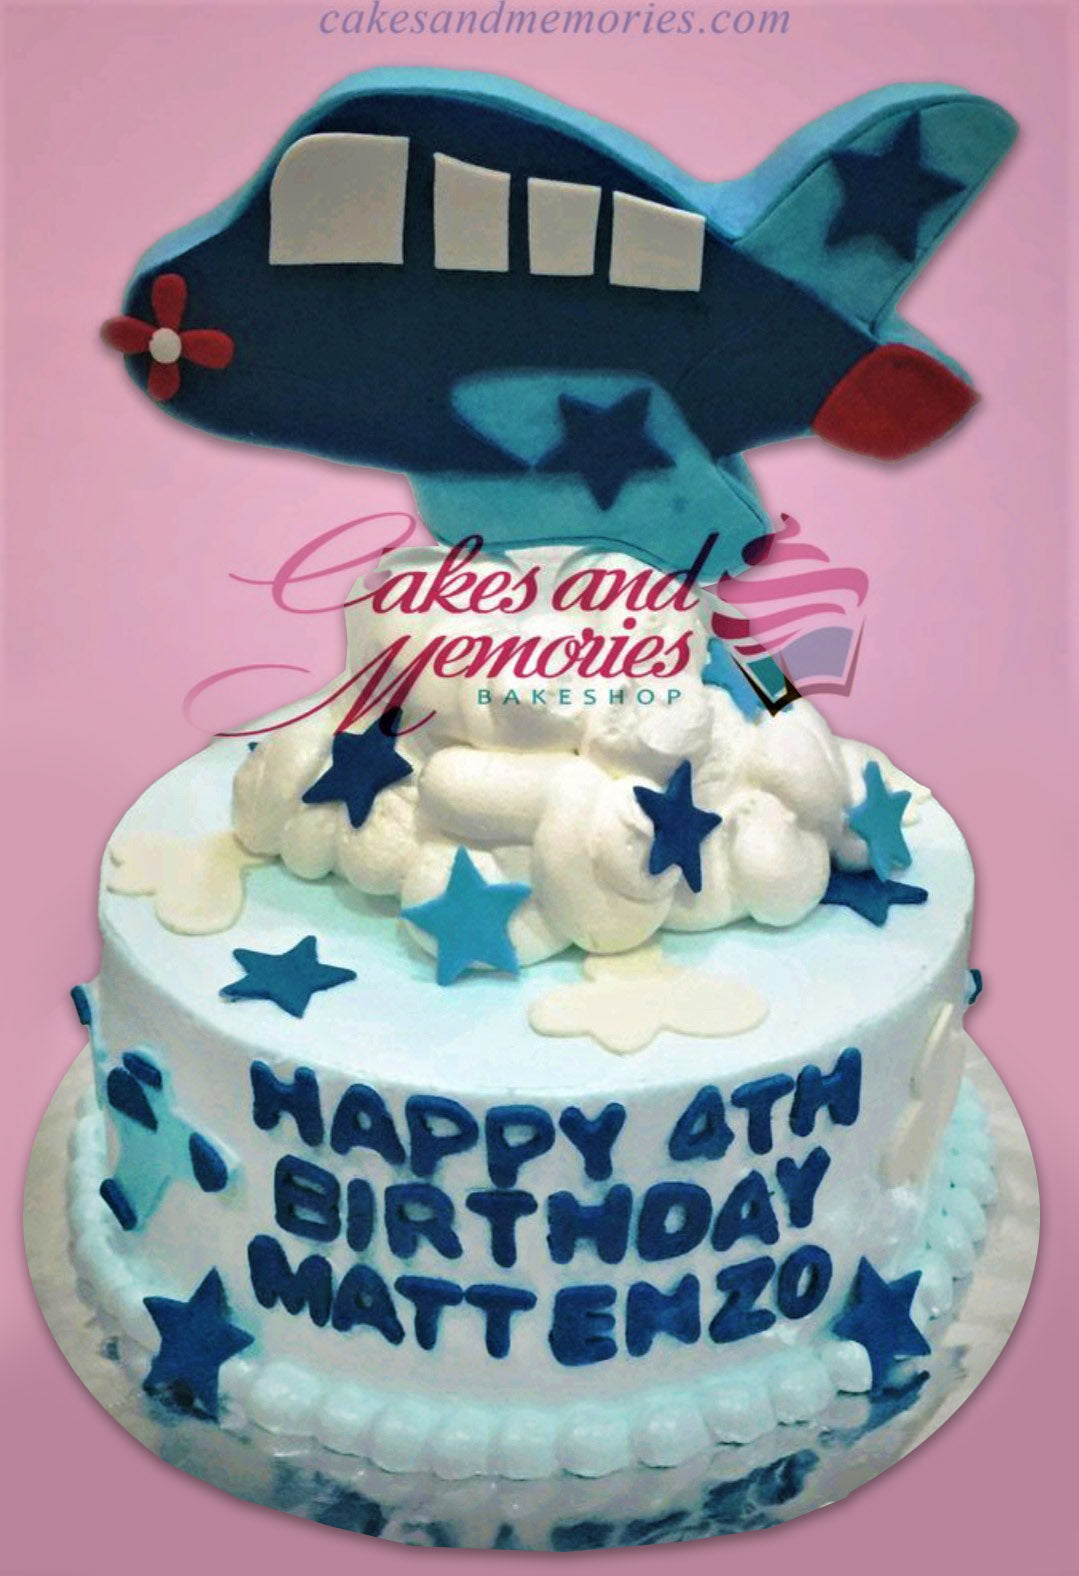 Baby Plane and Car theme cake - Cake Away | Premium and Custom Cake Shop in  Dubai